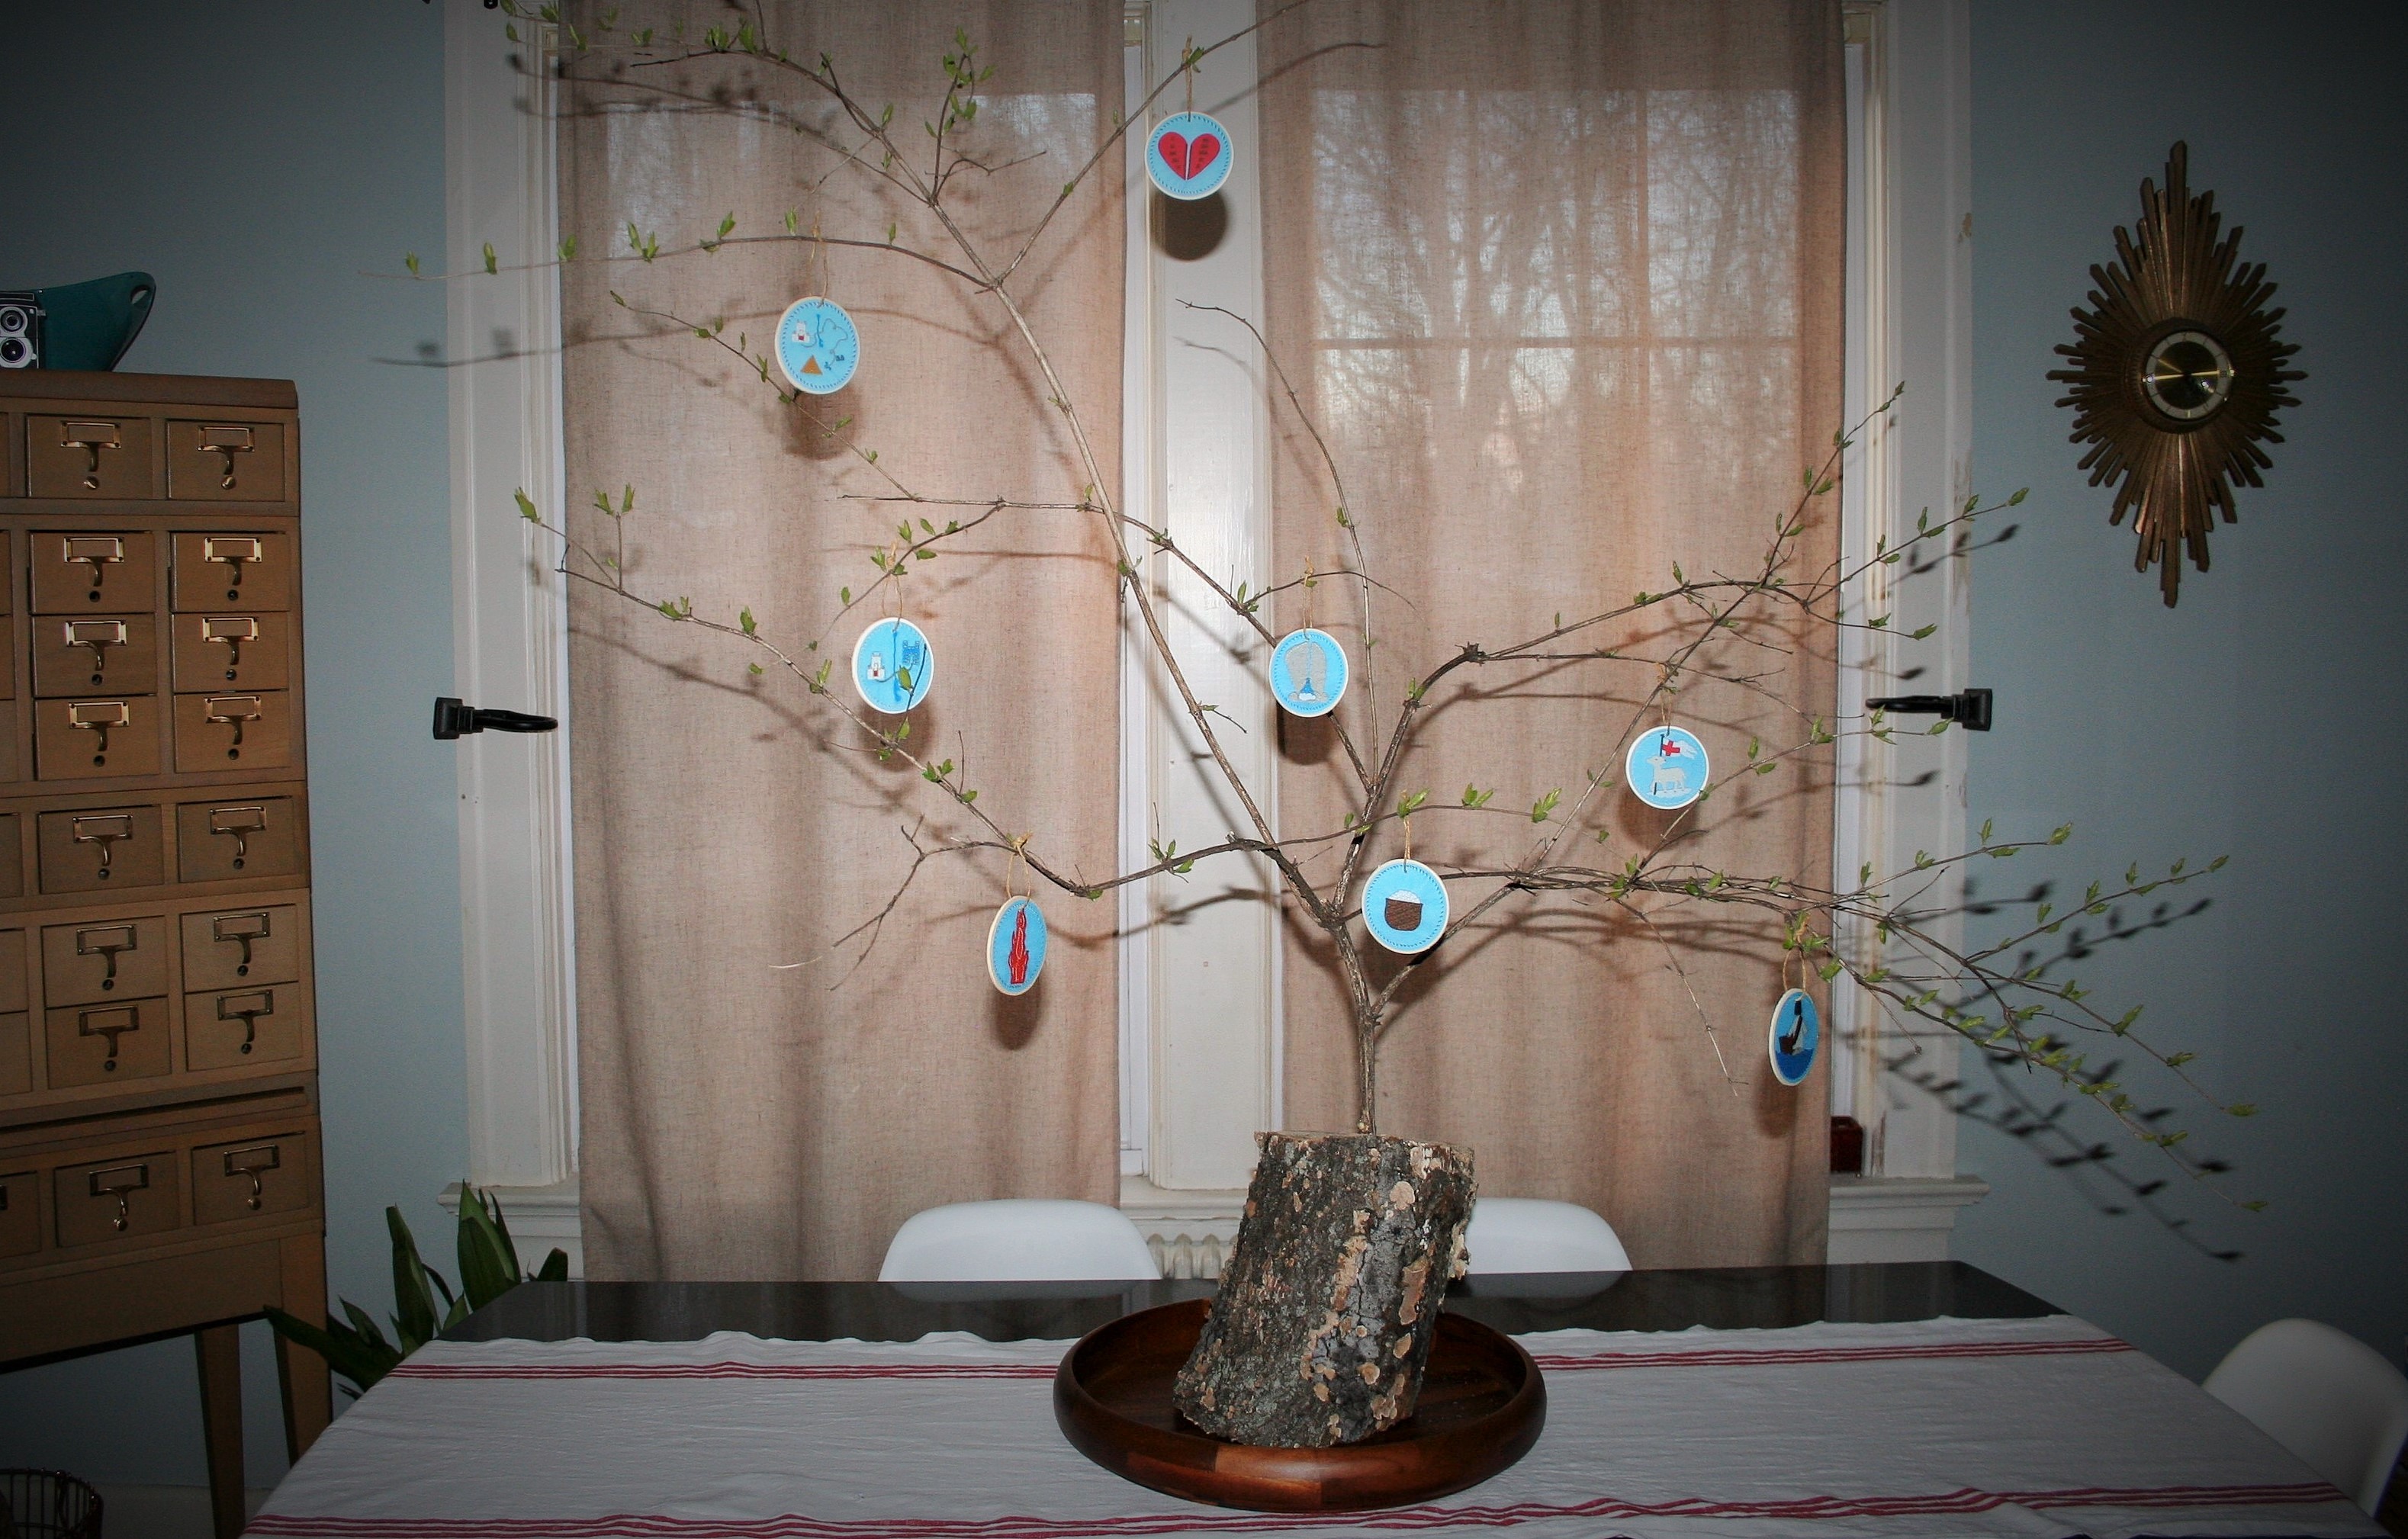 8 Easy Passover Easter Jesse Tree Display Ideas